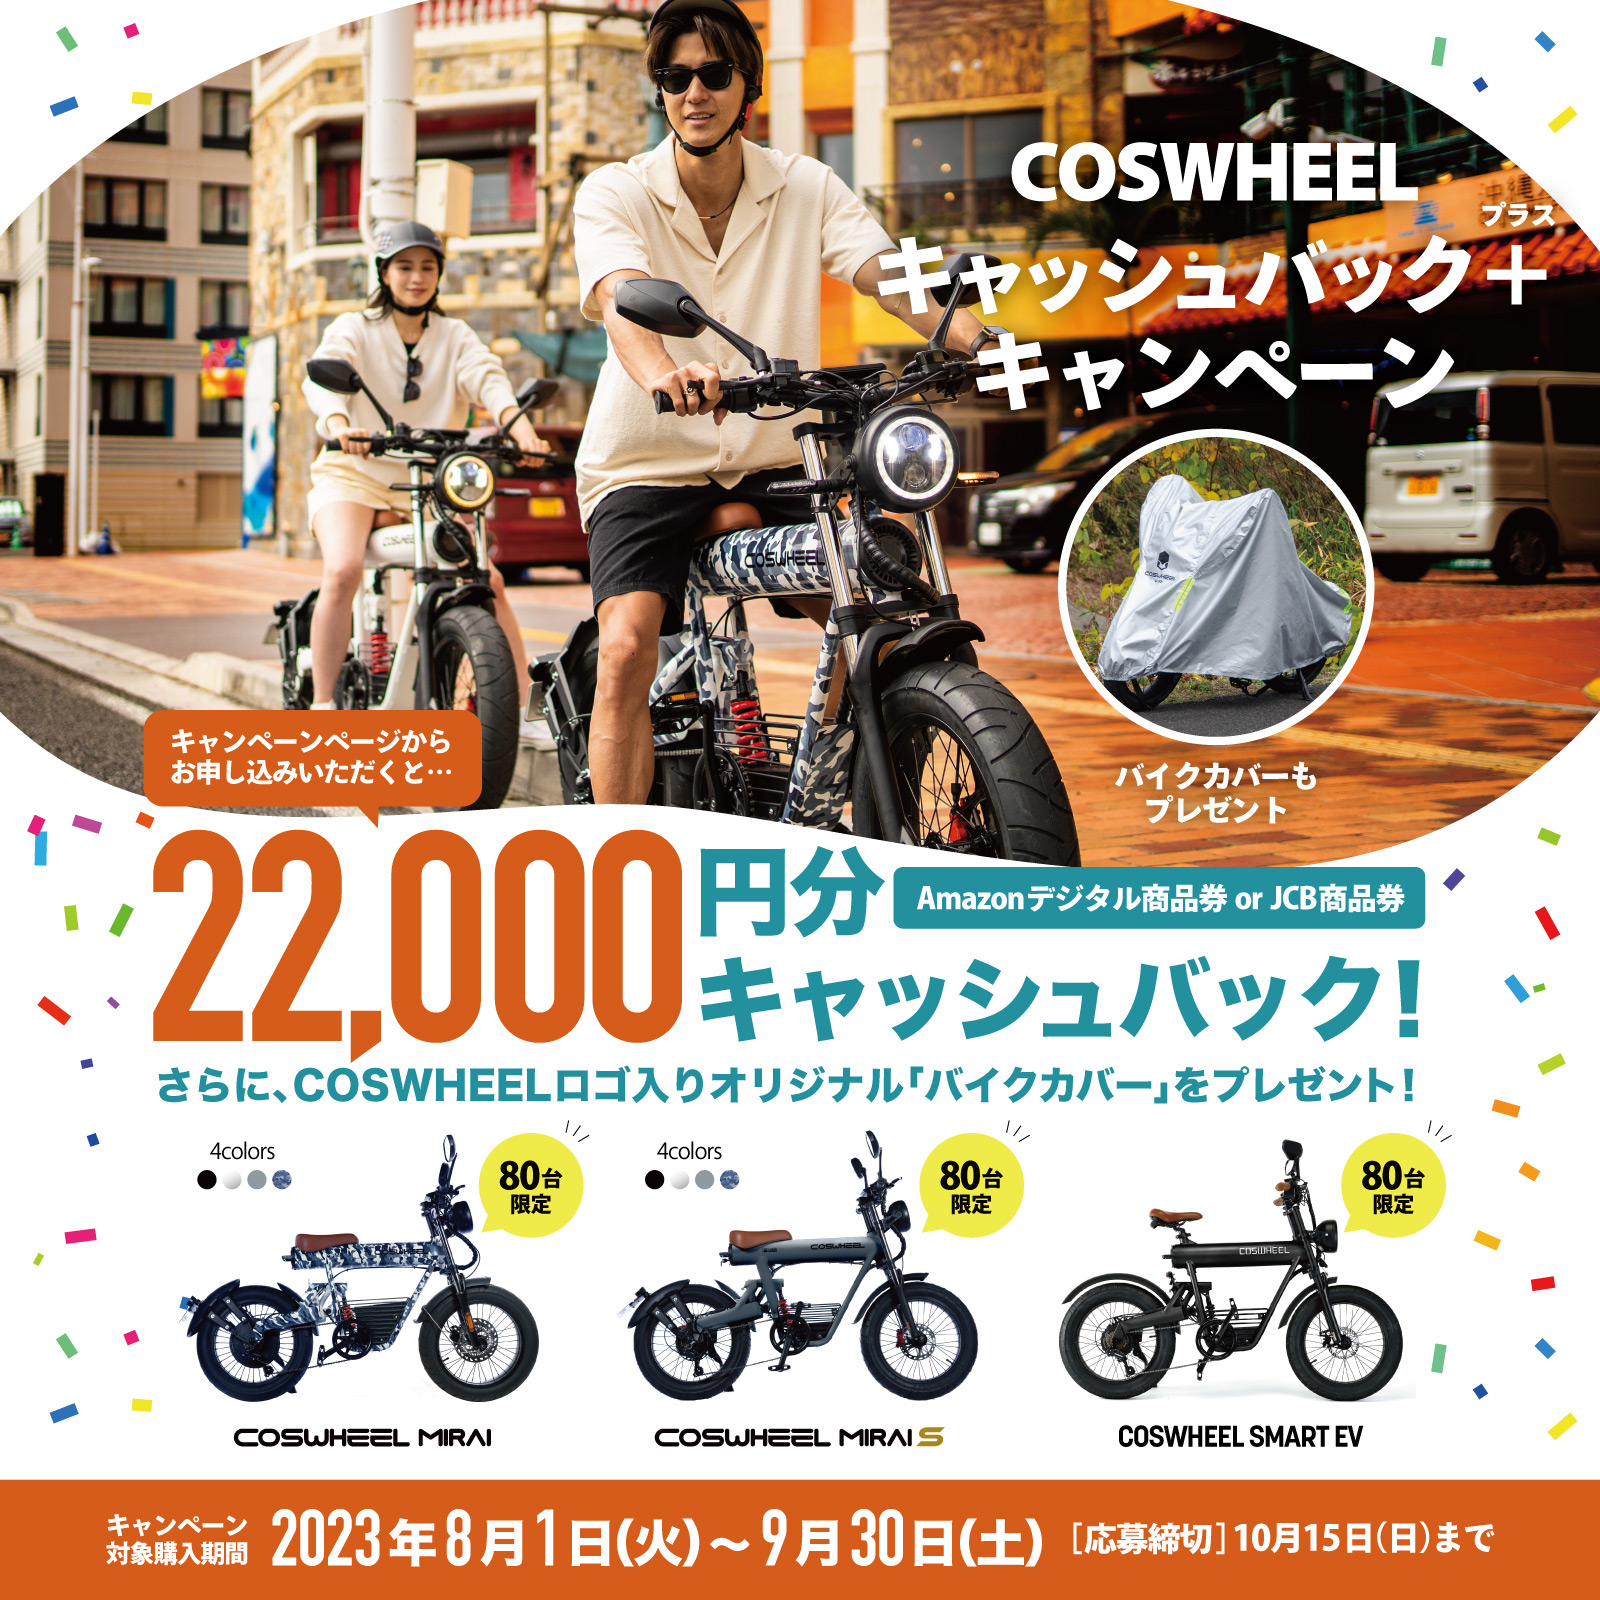 COSWHEEL MIRAI S 電動バイク 500w 原付一種 モデル / 公道走行可能